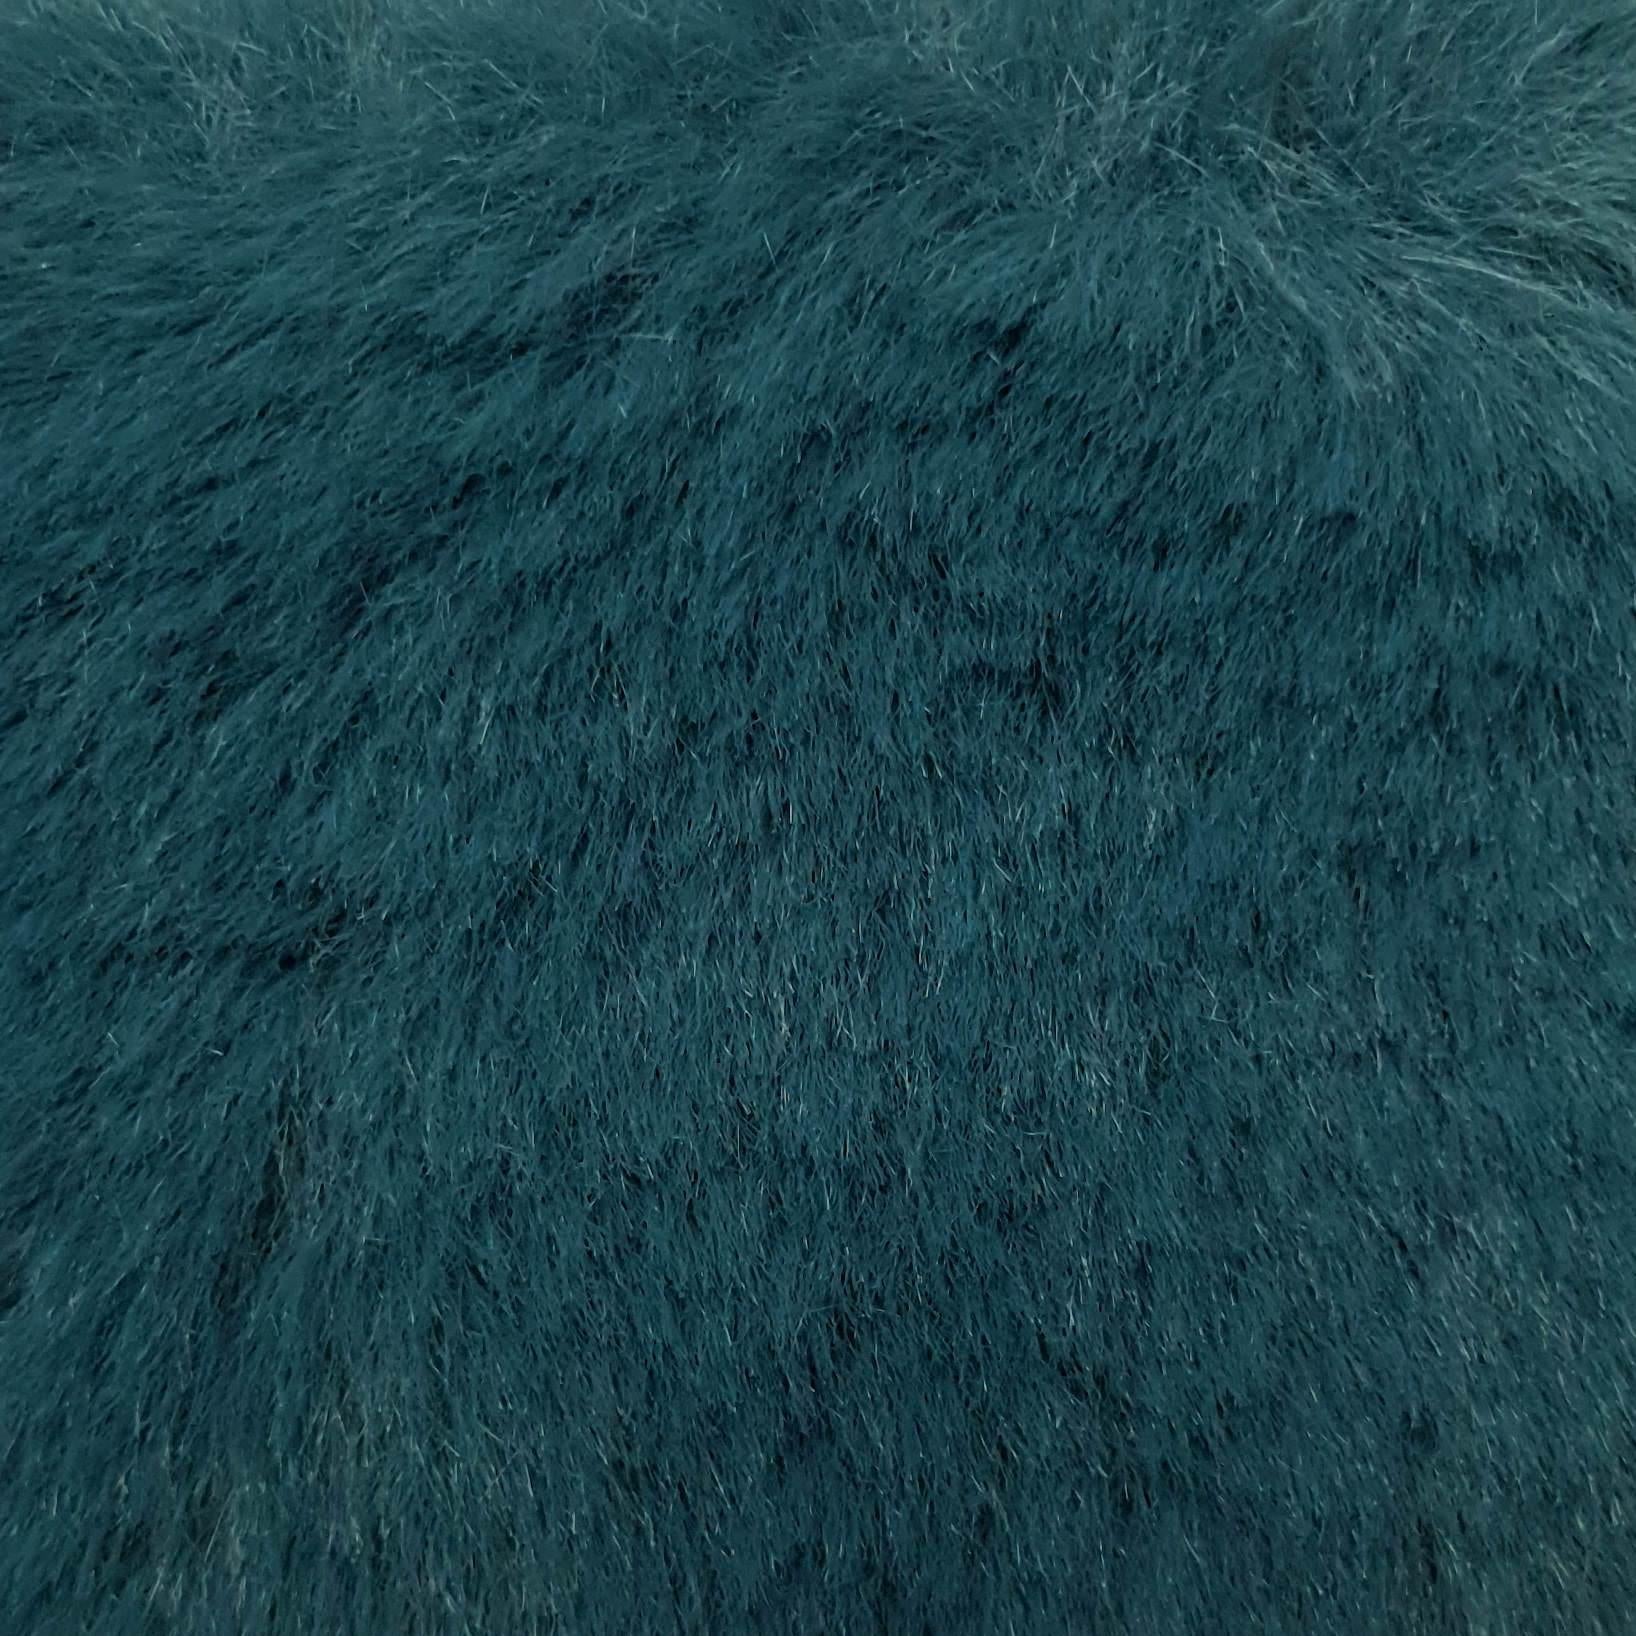 10MM Faux Fur Fabric-Ocean